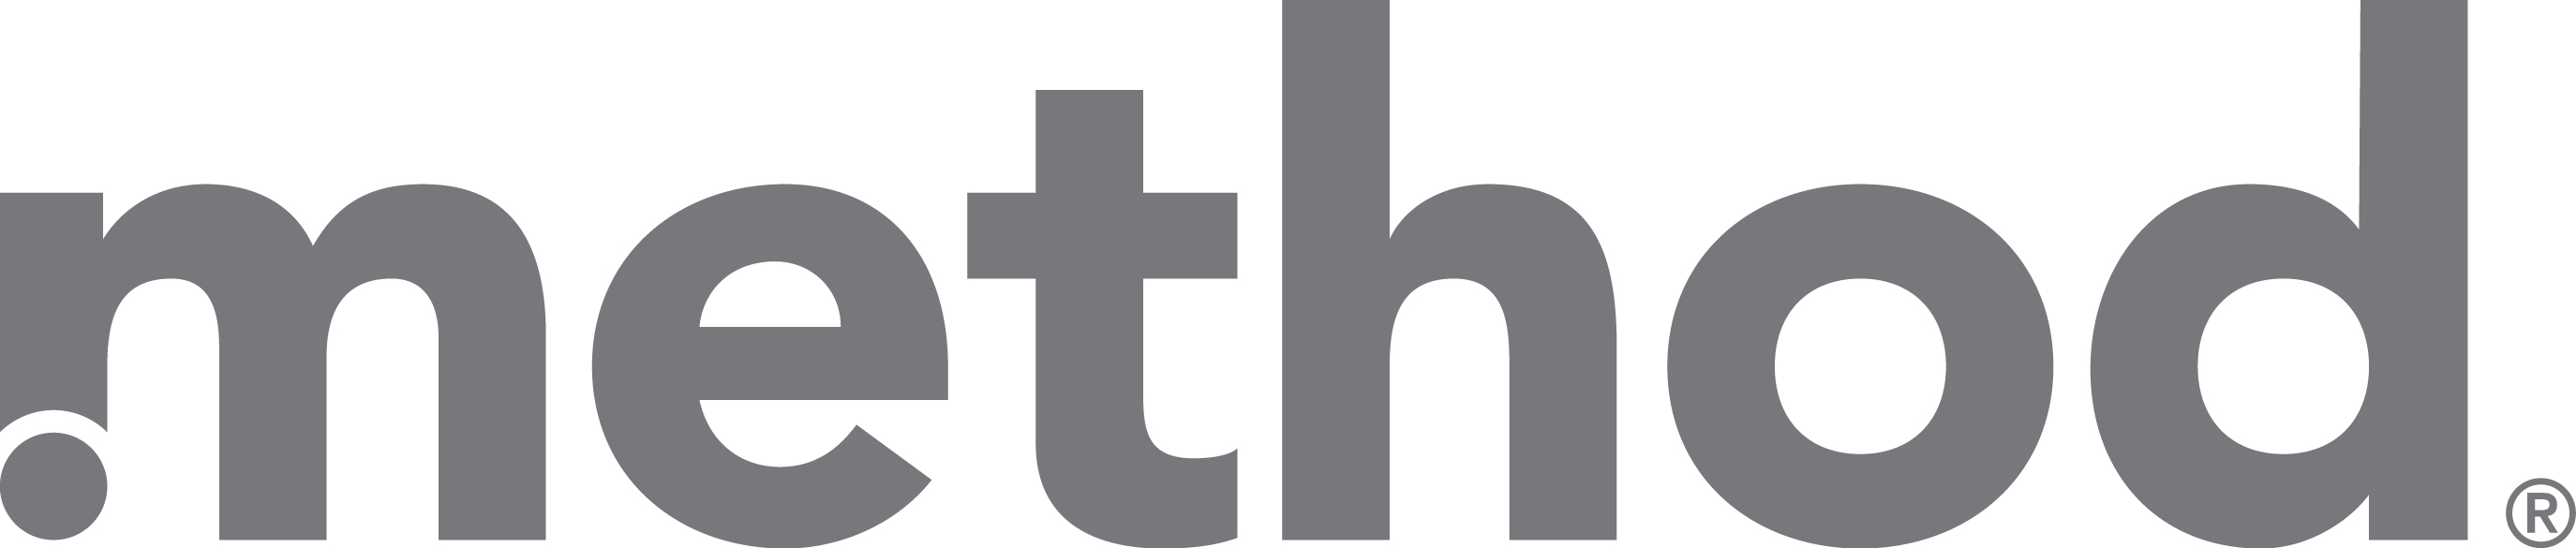 Method Products, Inc. logo